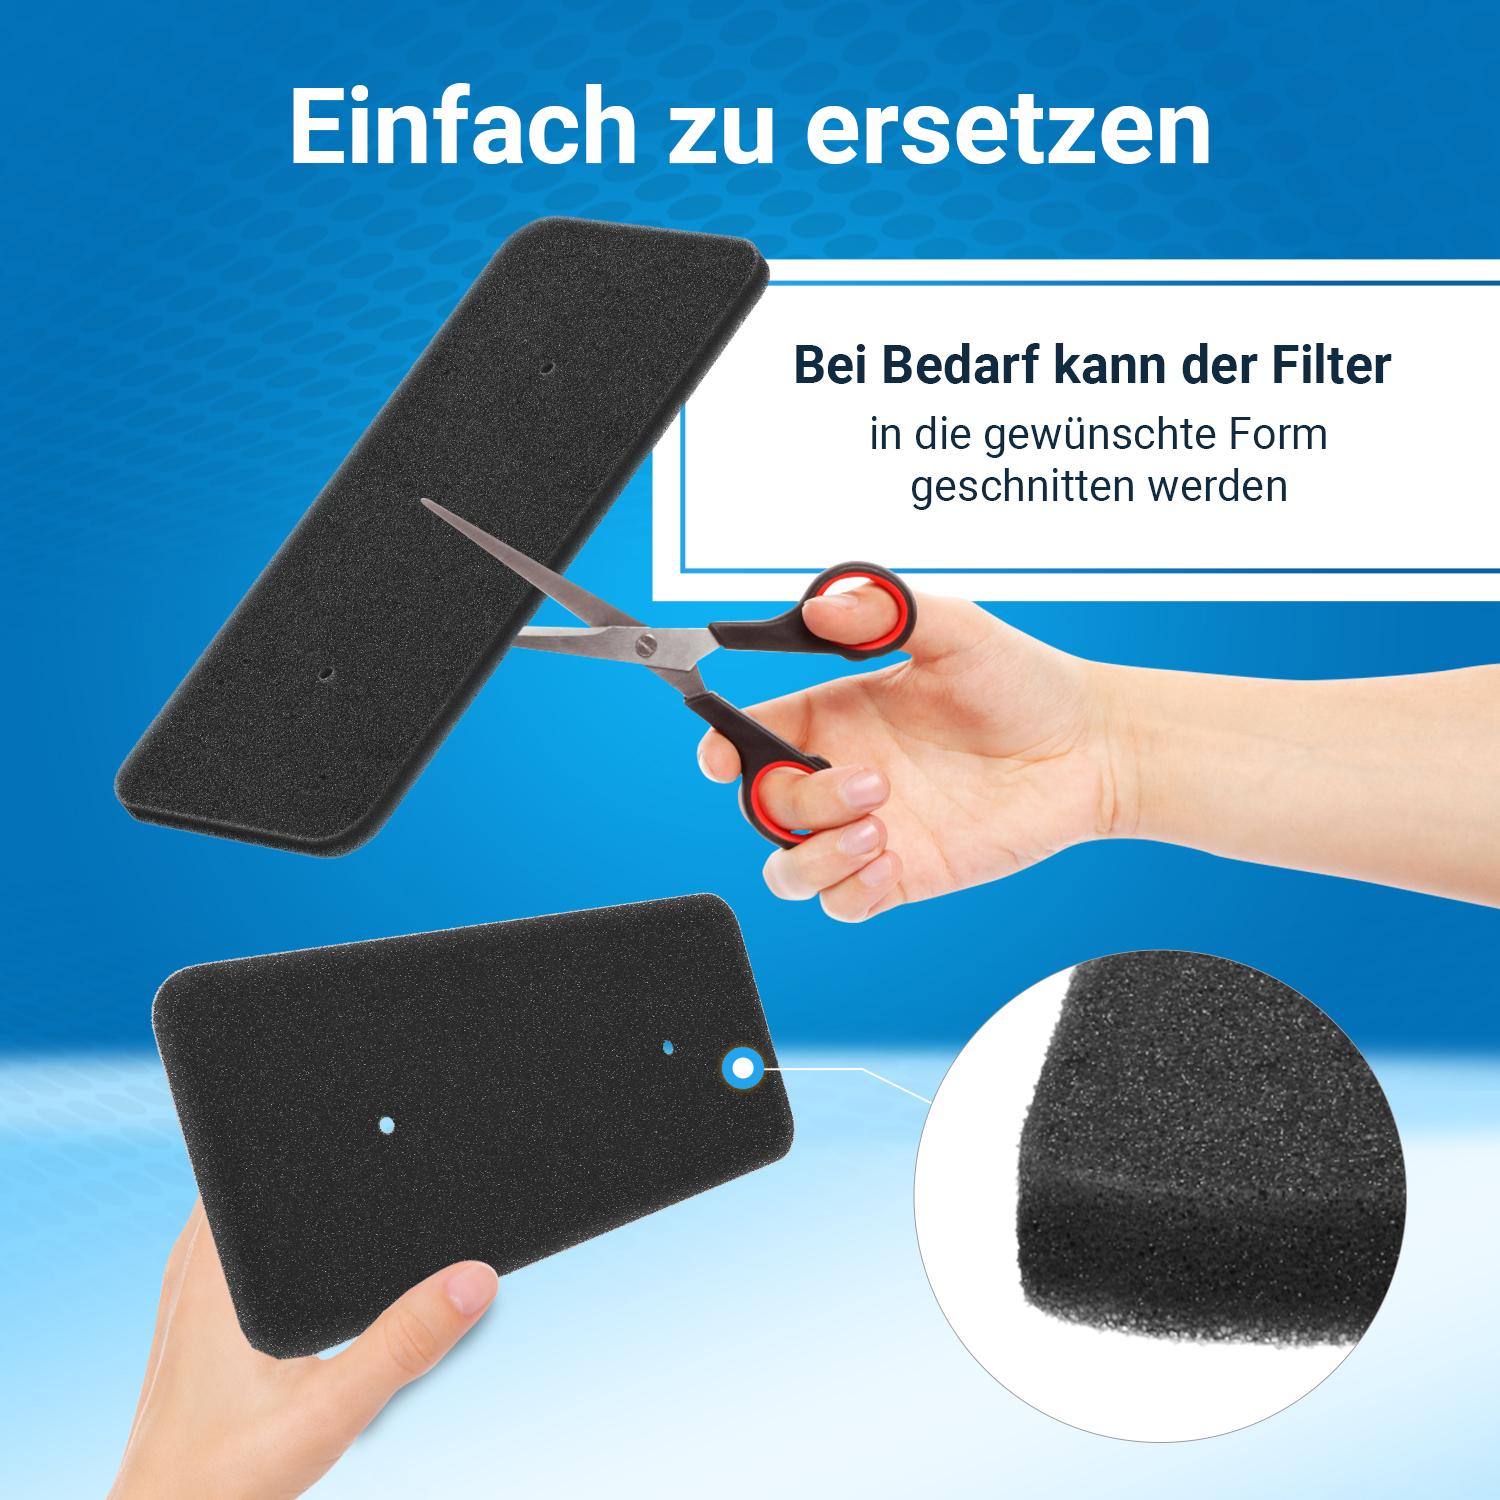 Filter Eurofilter DFH10 for Dryer